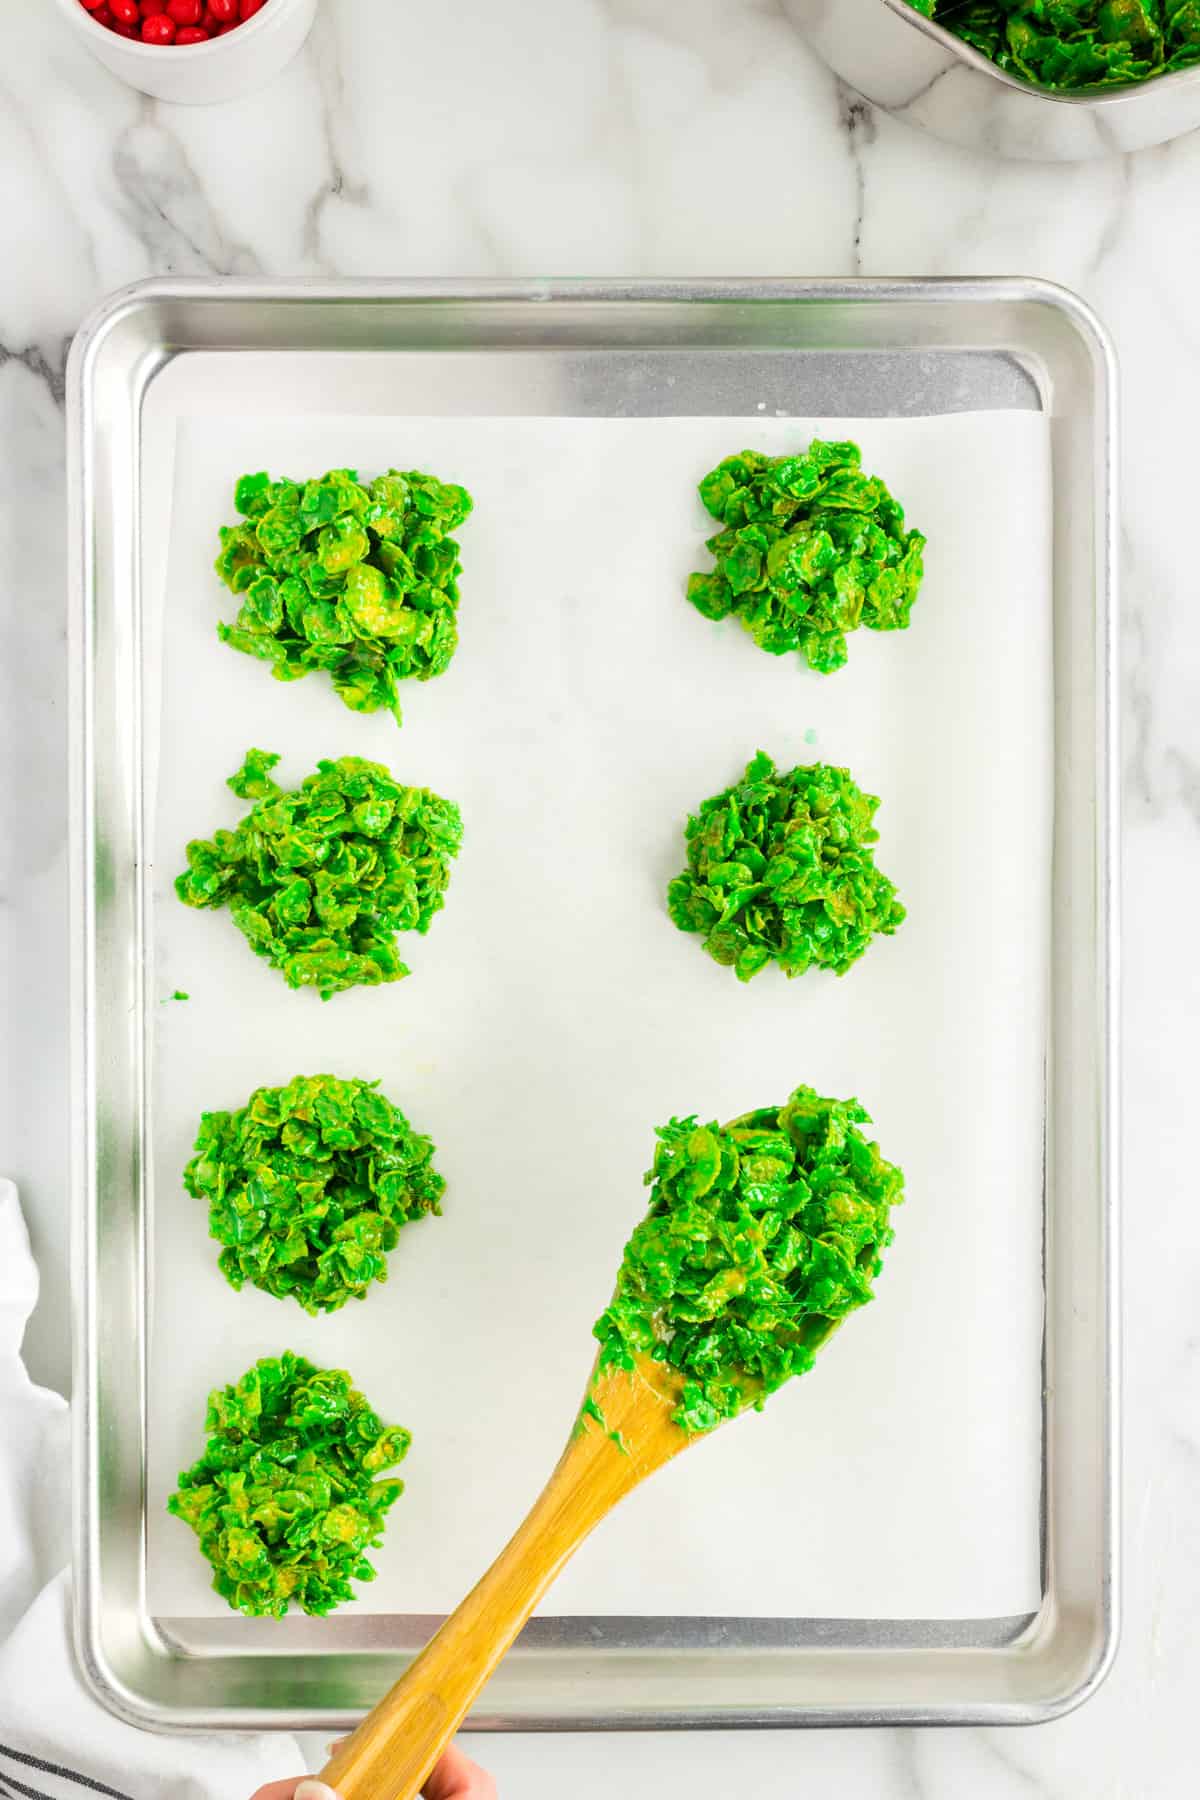 Scoop spoonfuls of green cornflake mixture onto sheet pan